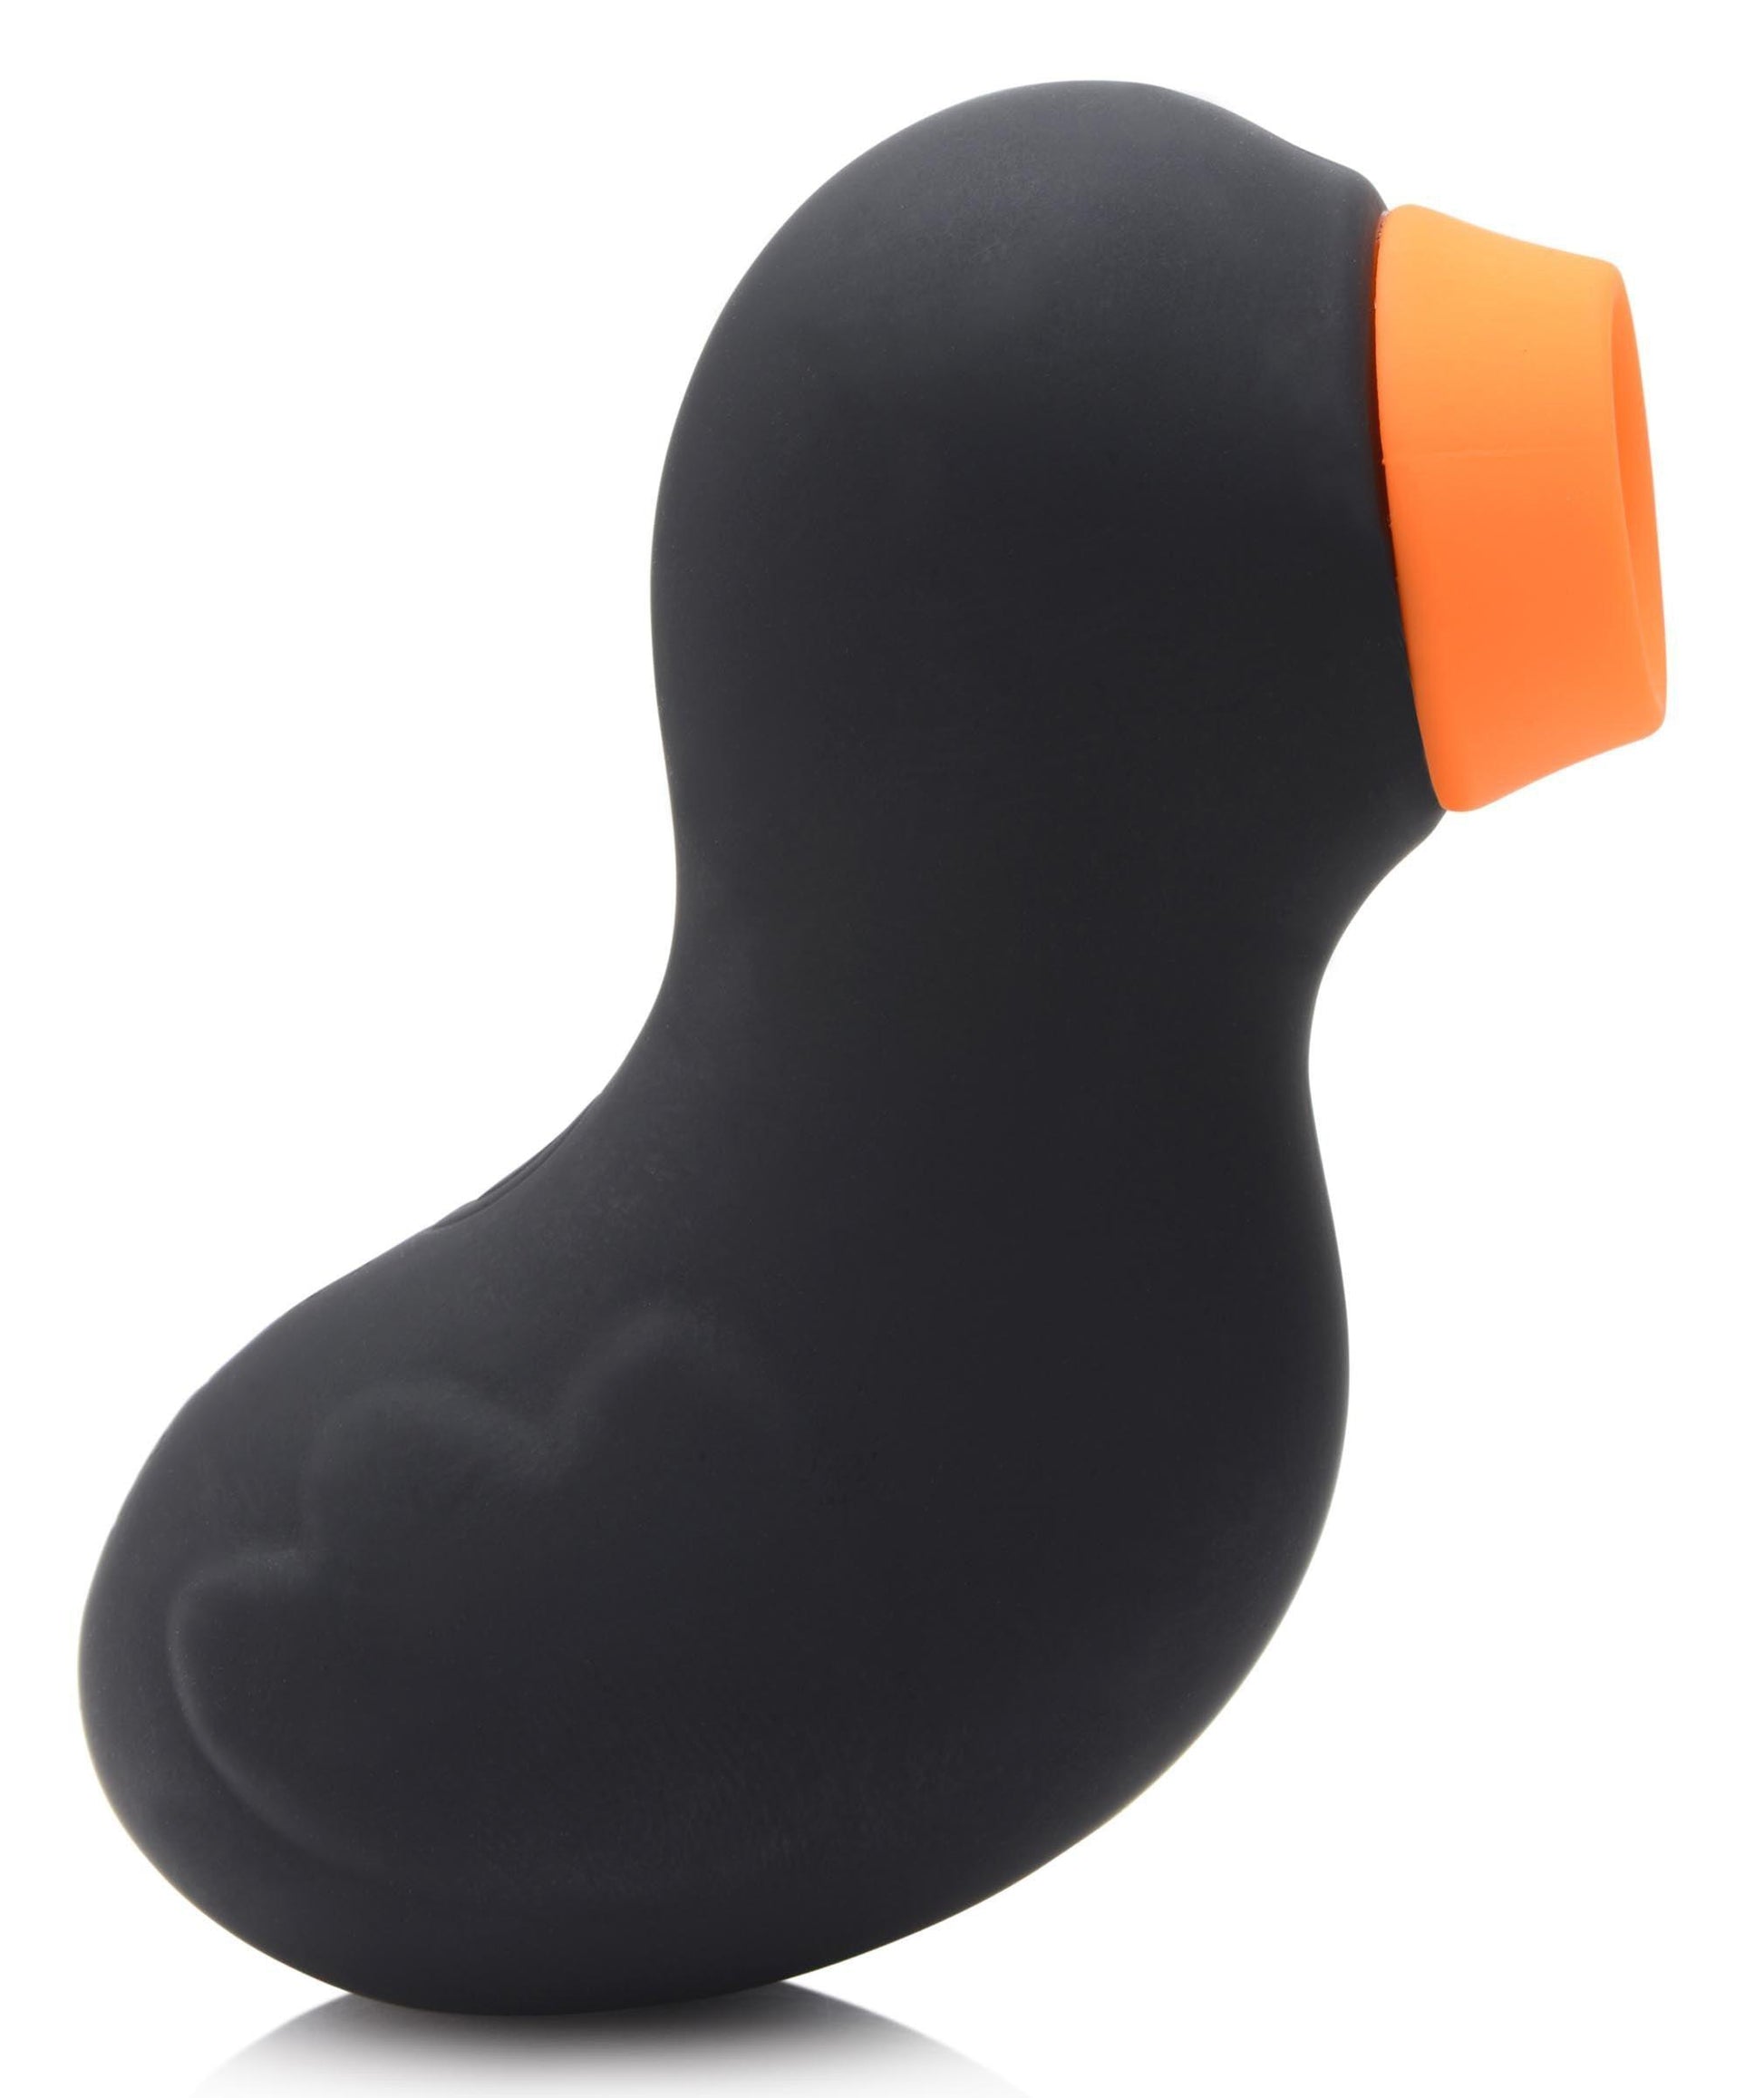 Sucky Ducky Silicone Clitoral Stimulator - Black - My Sex Toy Hub